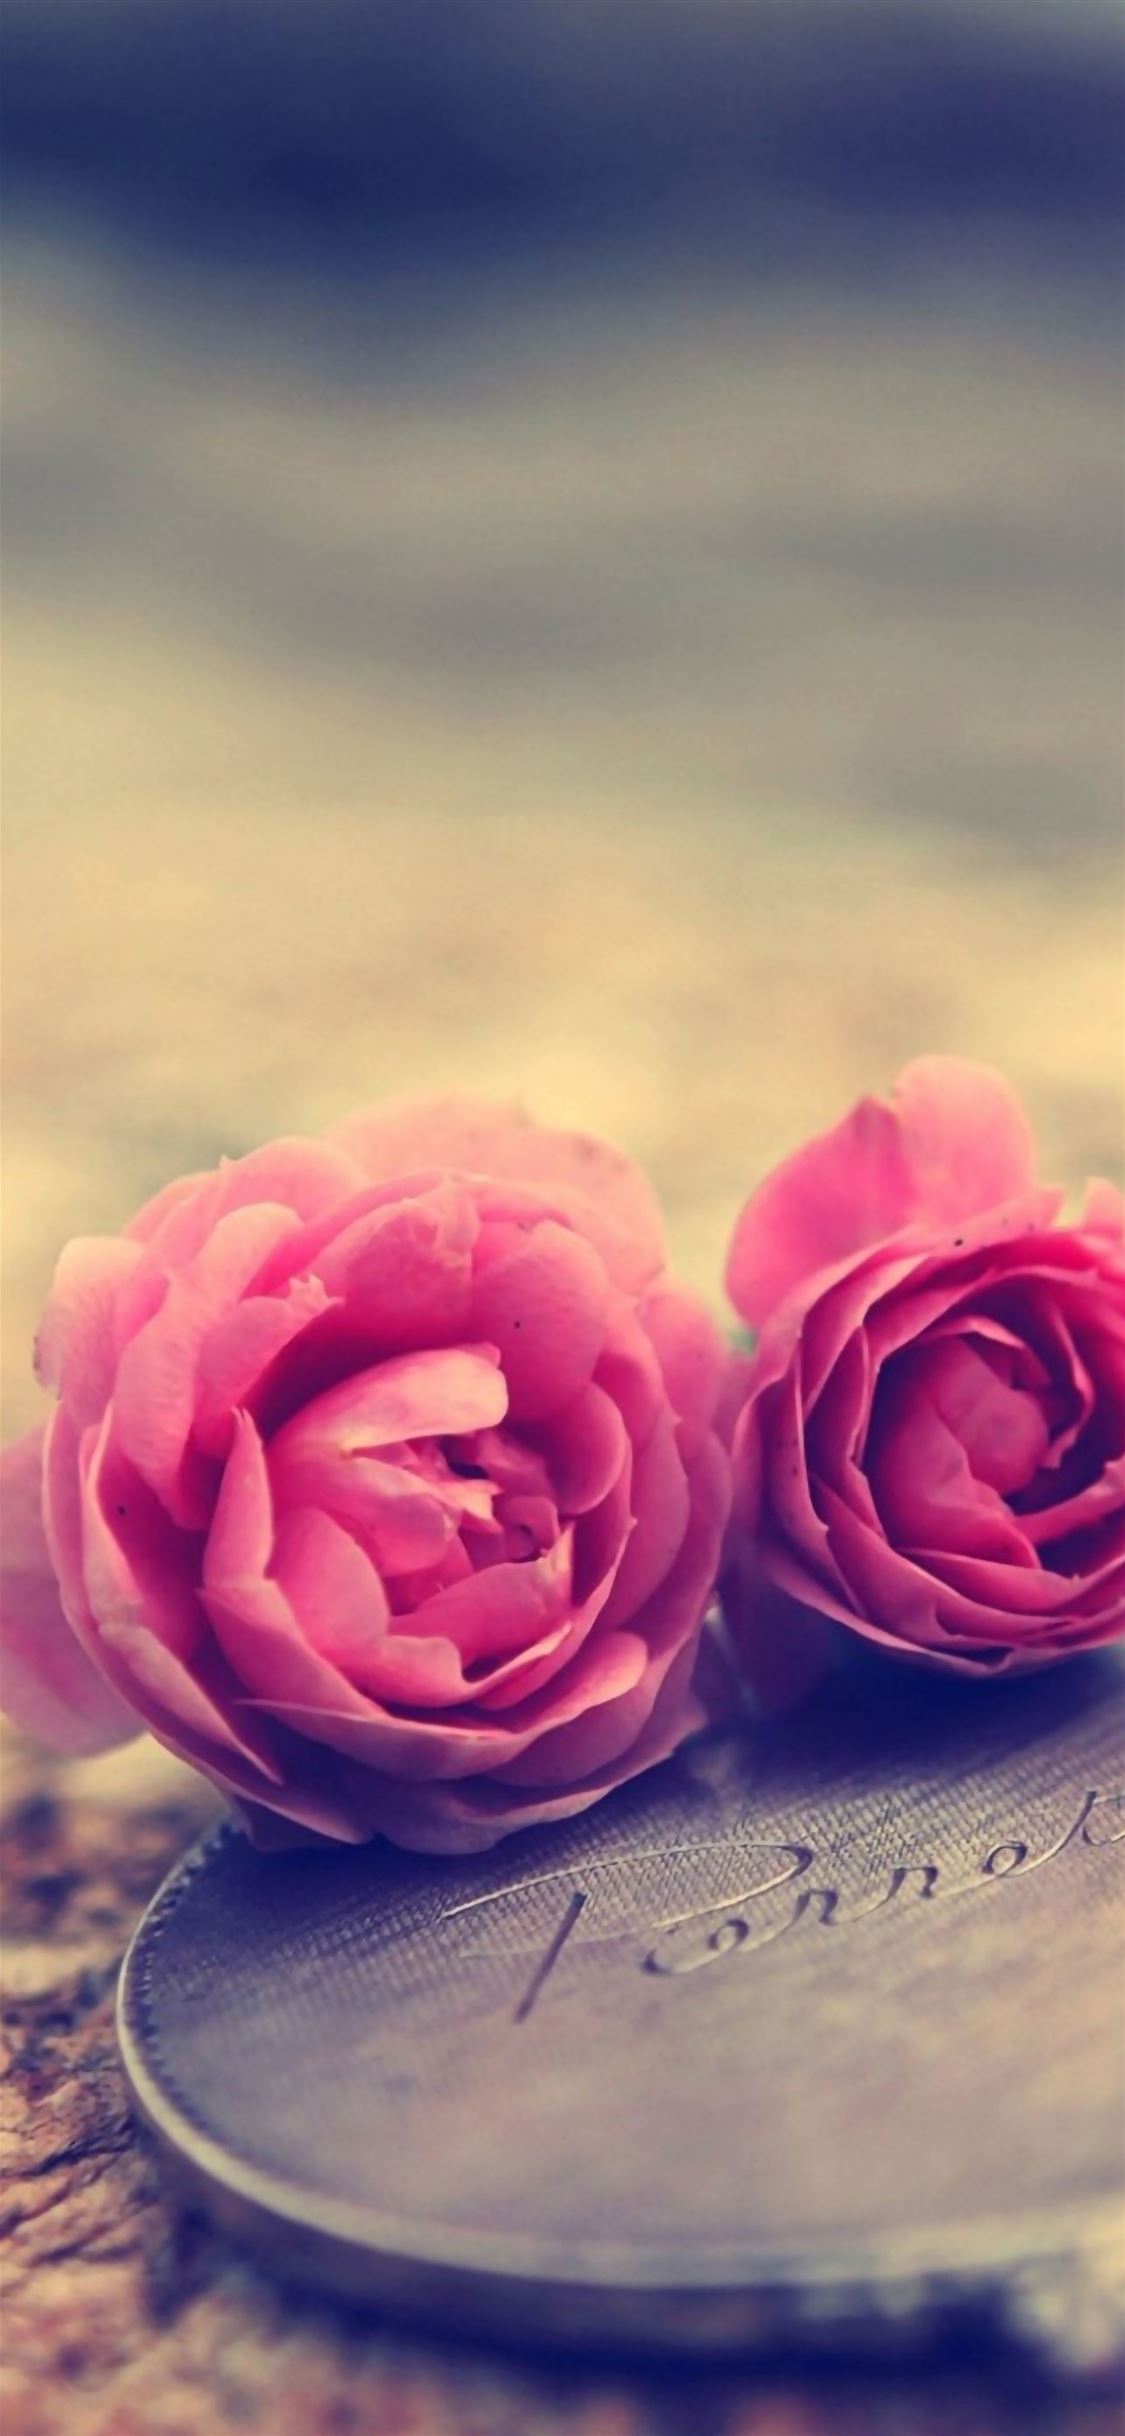 Miniature Roses iPhone wallpaper 